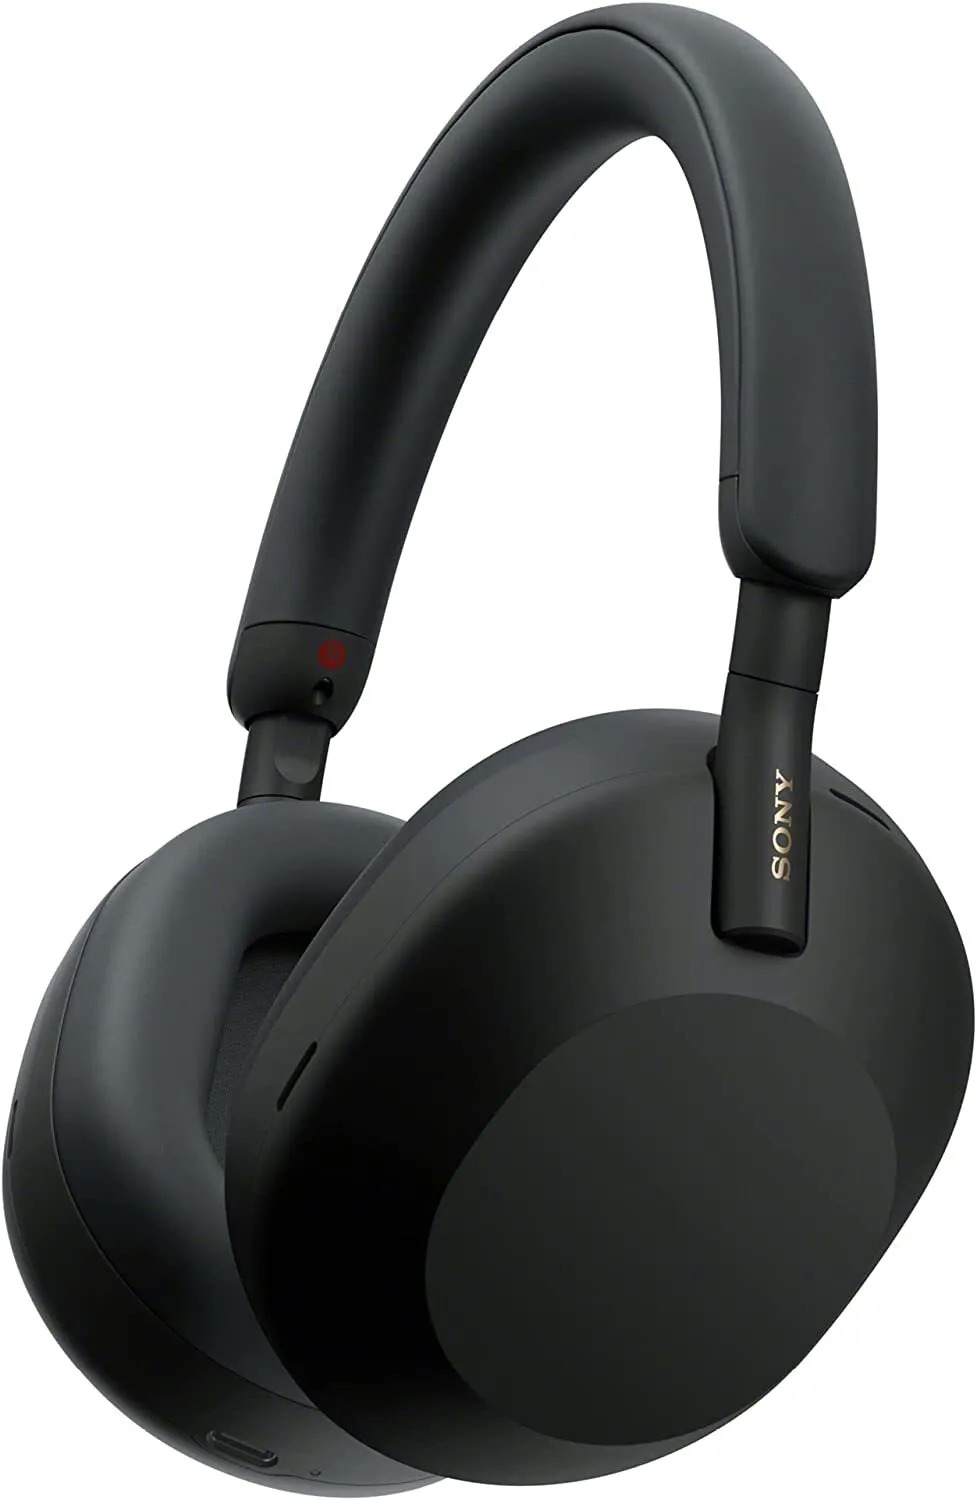 Sony WH-1000XM5/B Wireless Noise Canceling Bluetooth Headphones - Refurbished $199.99